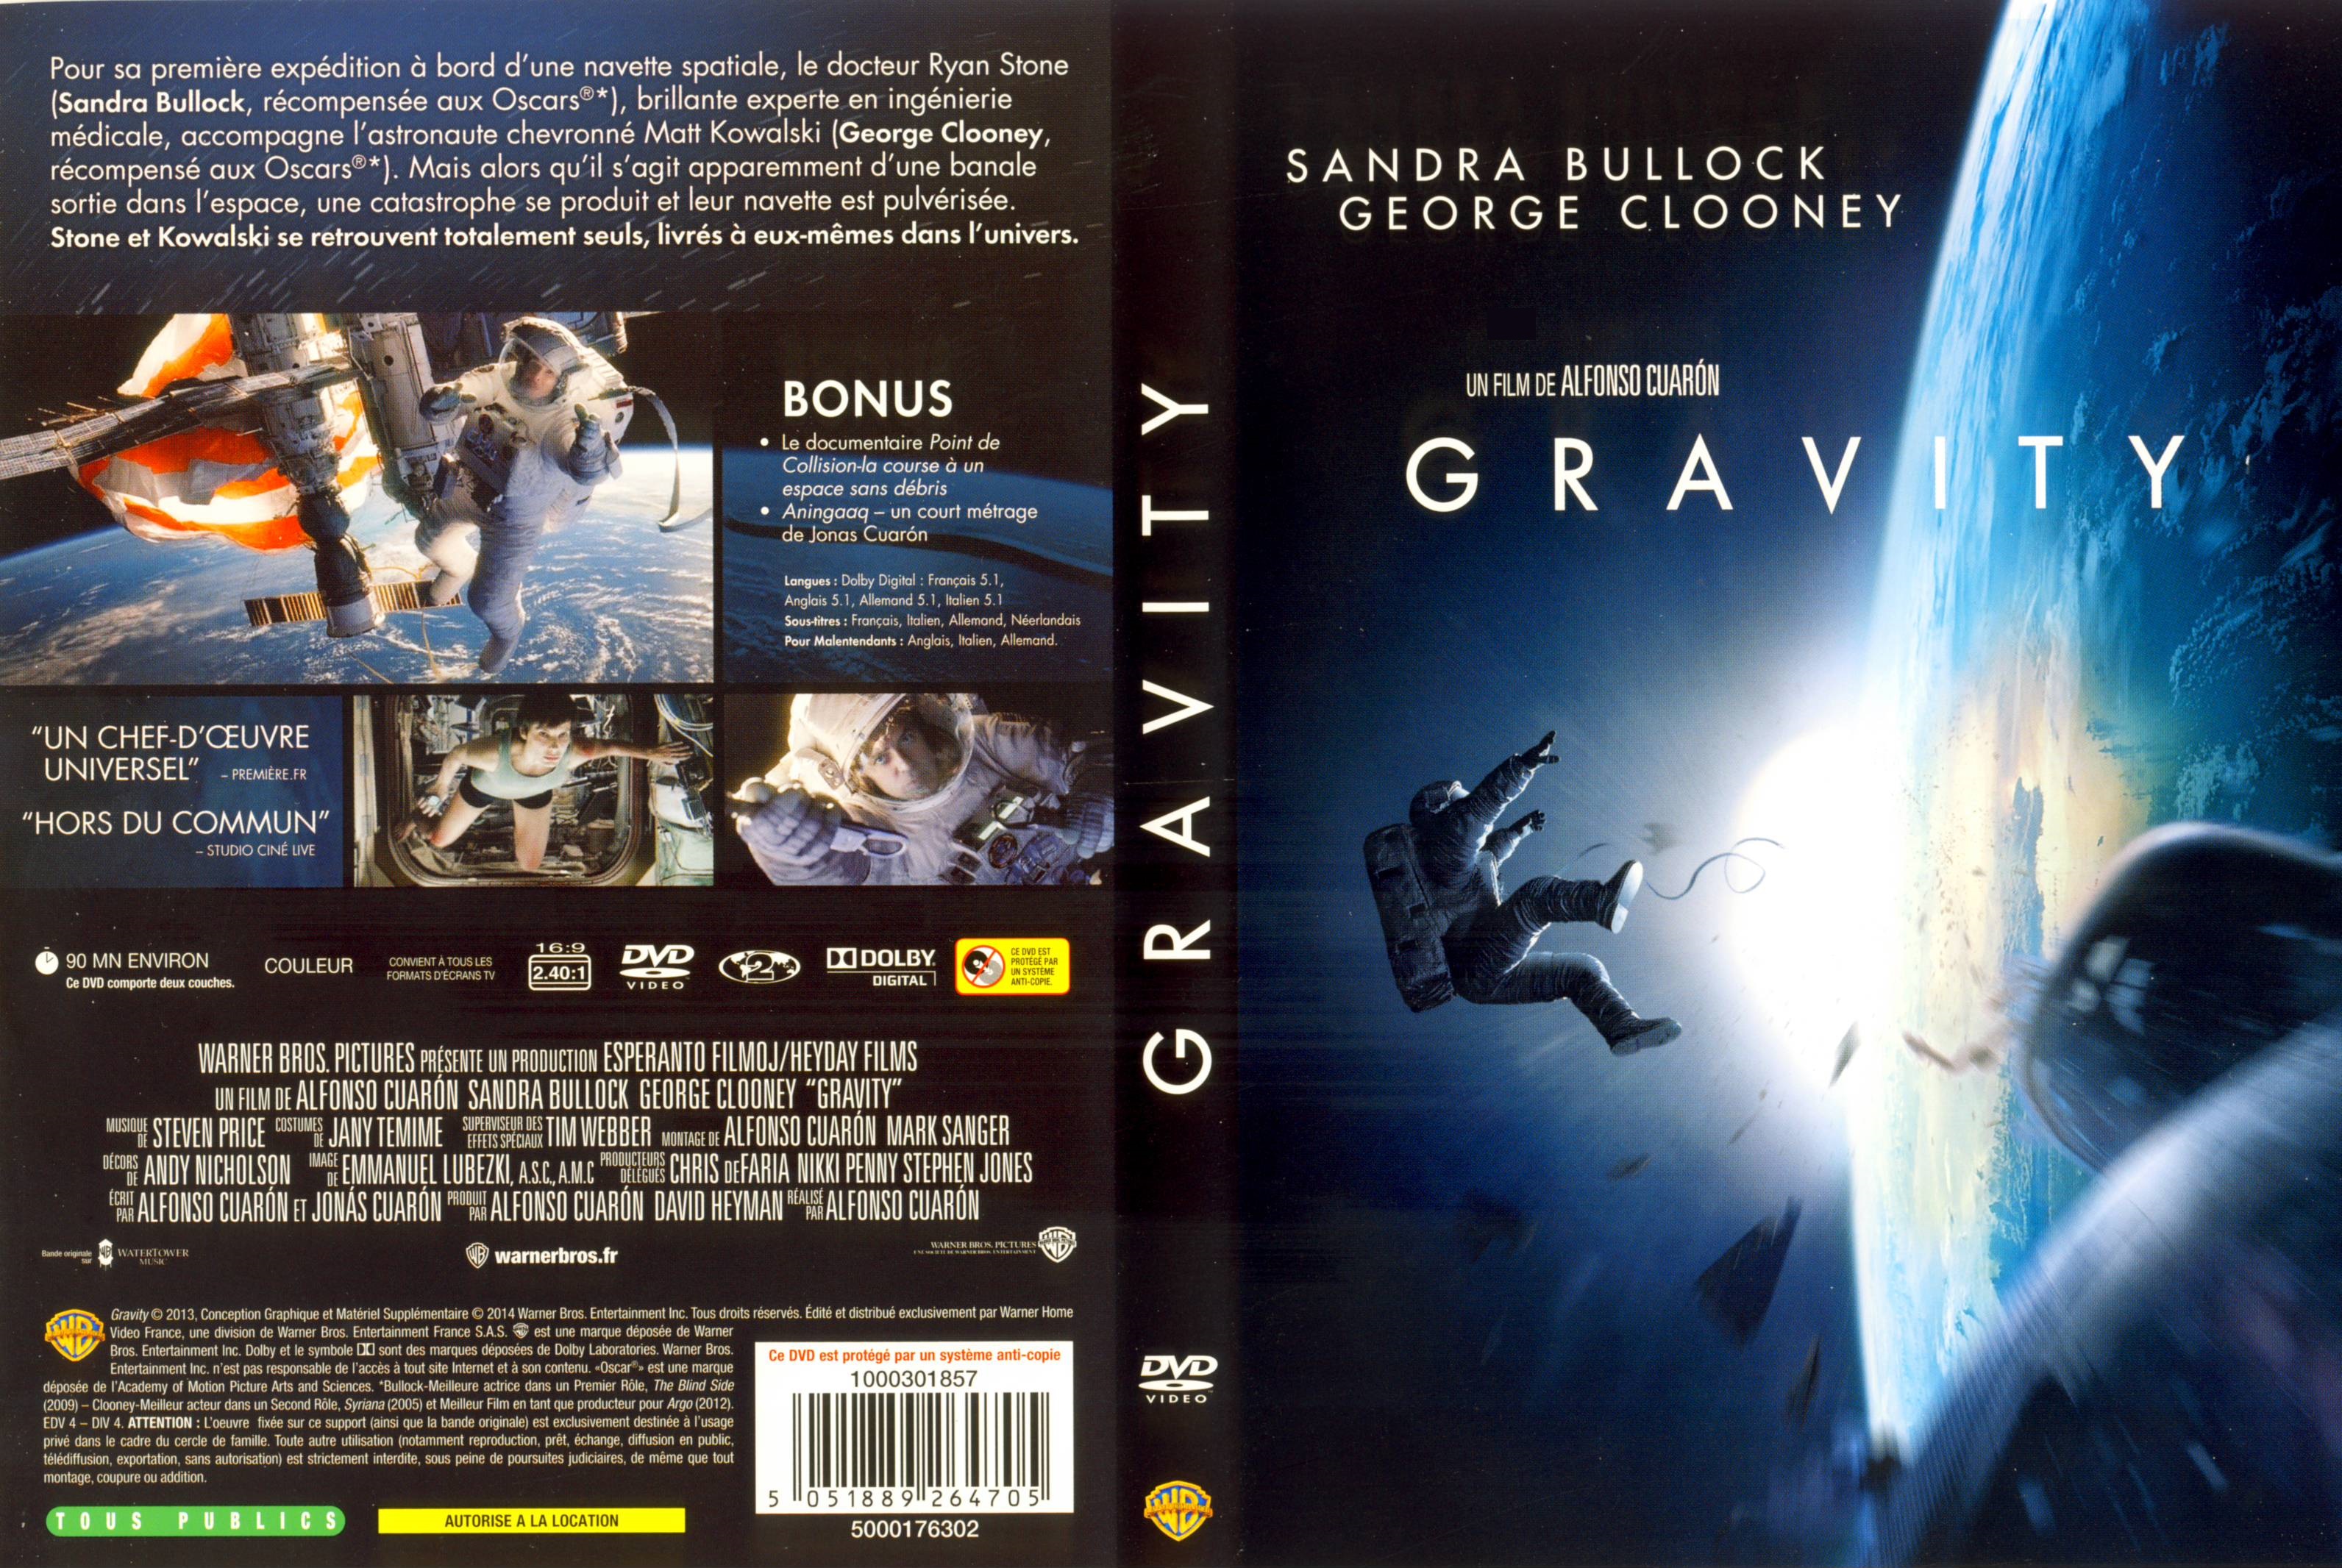 Jaquette DVD Gravity